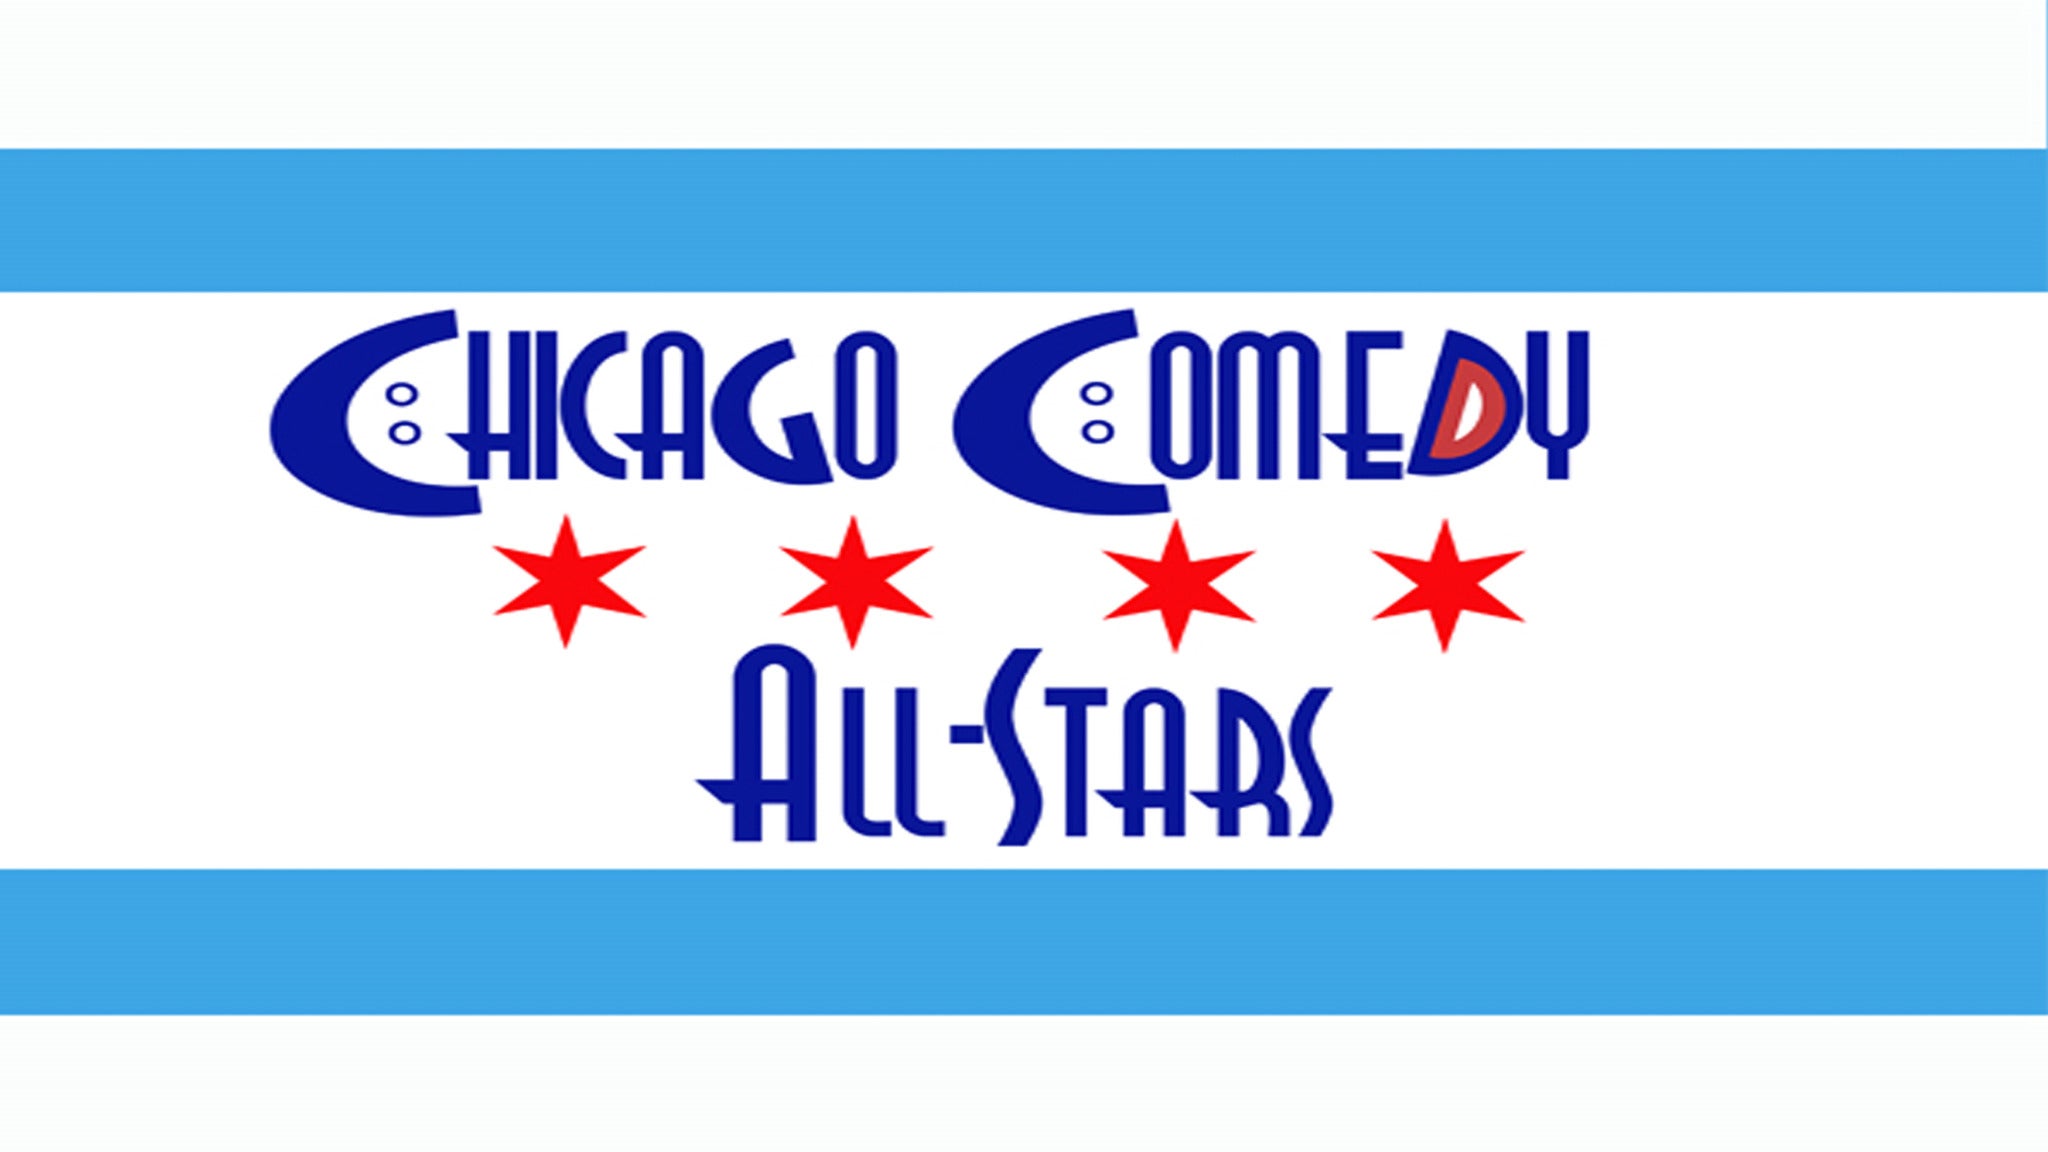 Chicago Comedy All Stars tickets, presale info, merch and more BoxOfficeHero